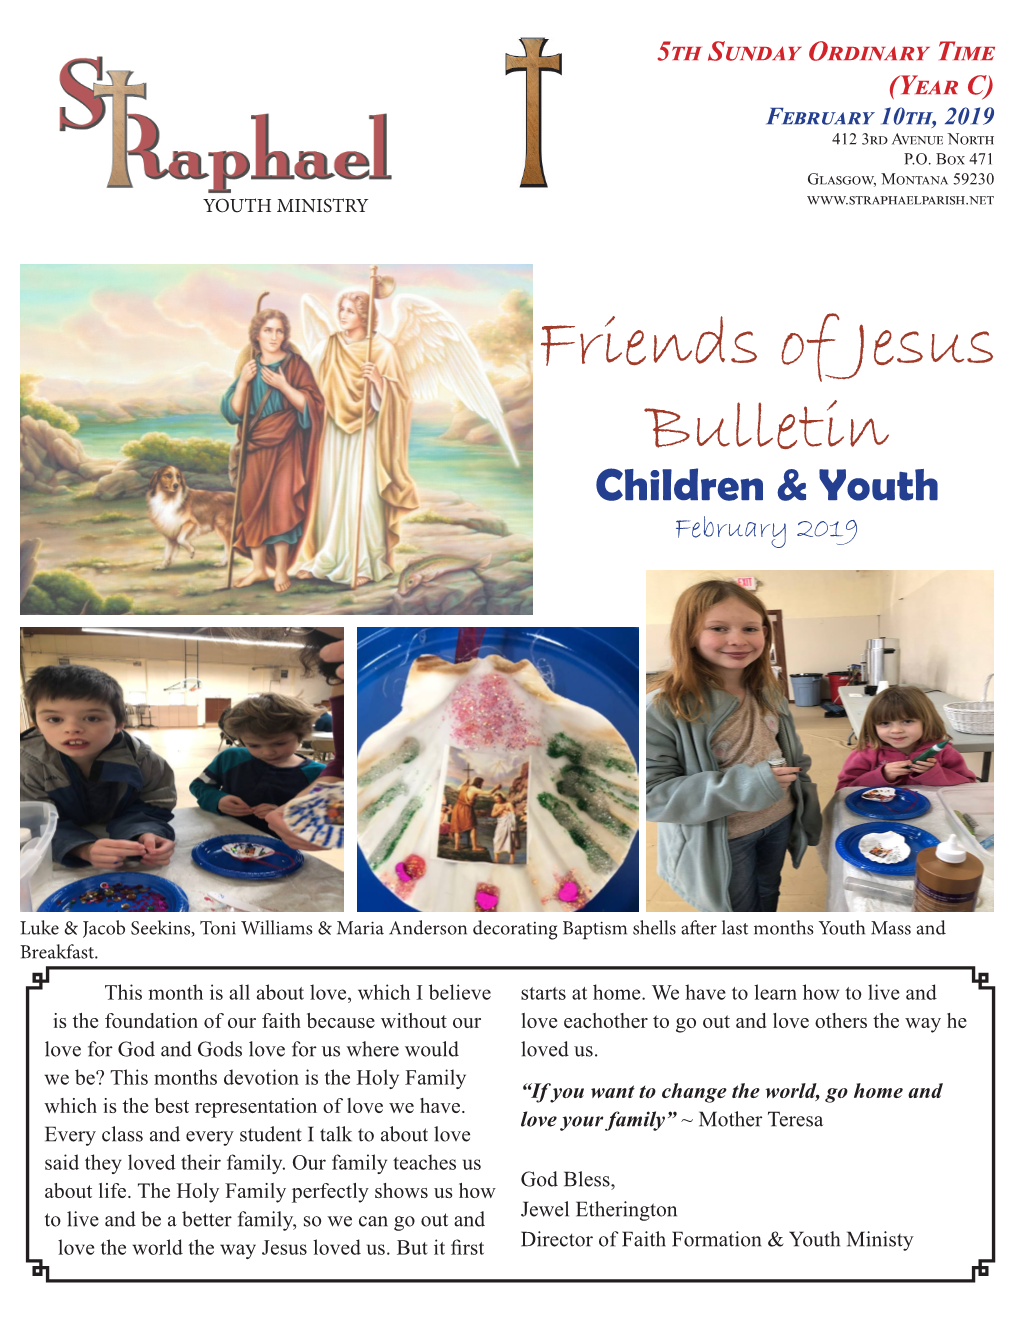 Friends of Jesus Bulletin Children & Youth February 2019